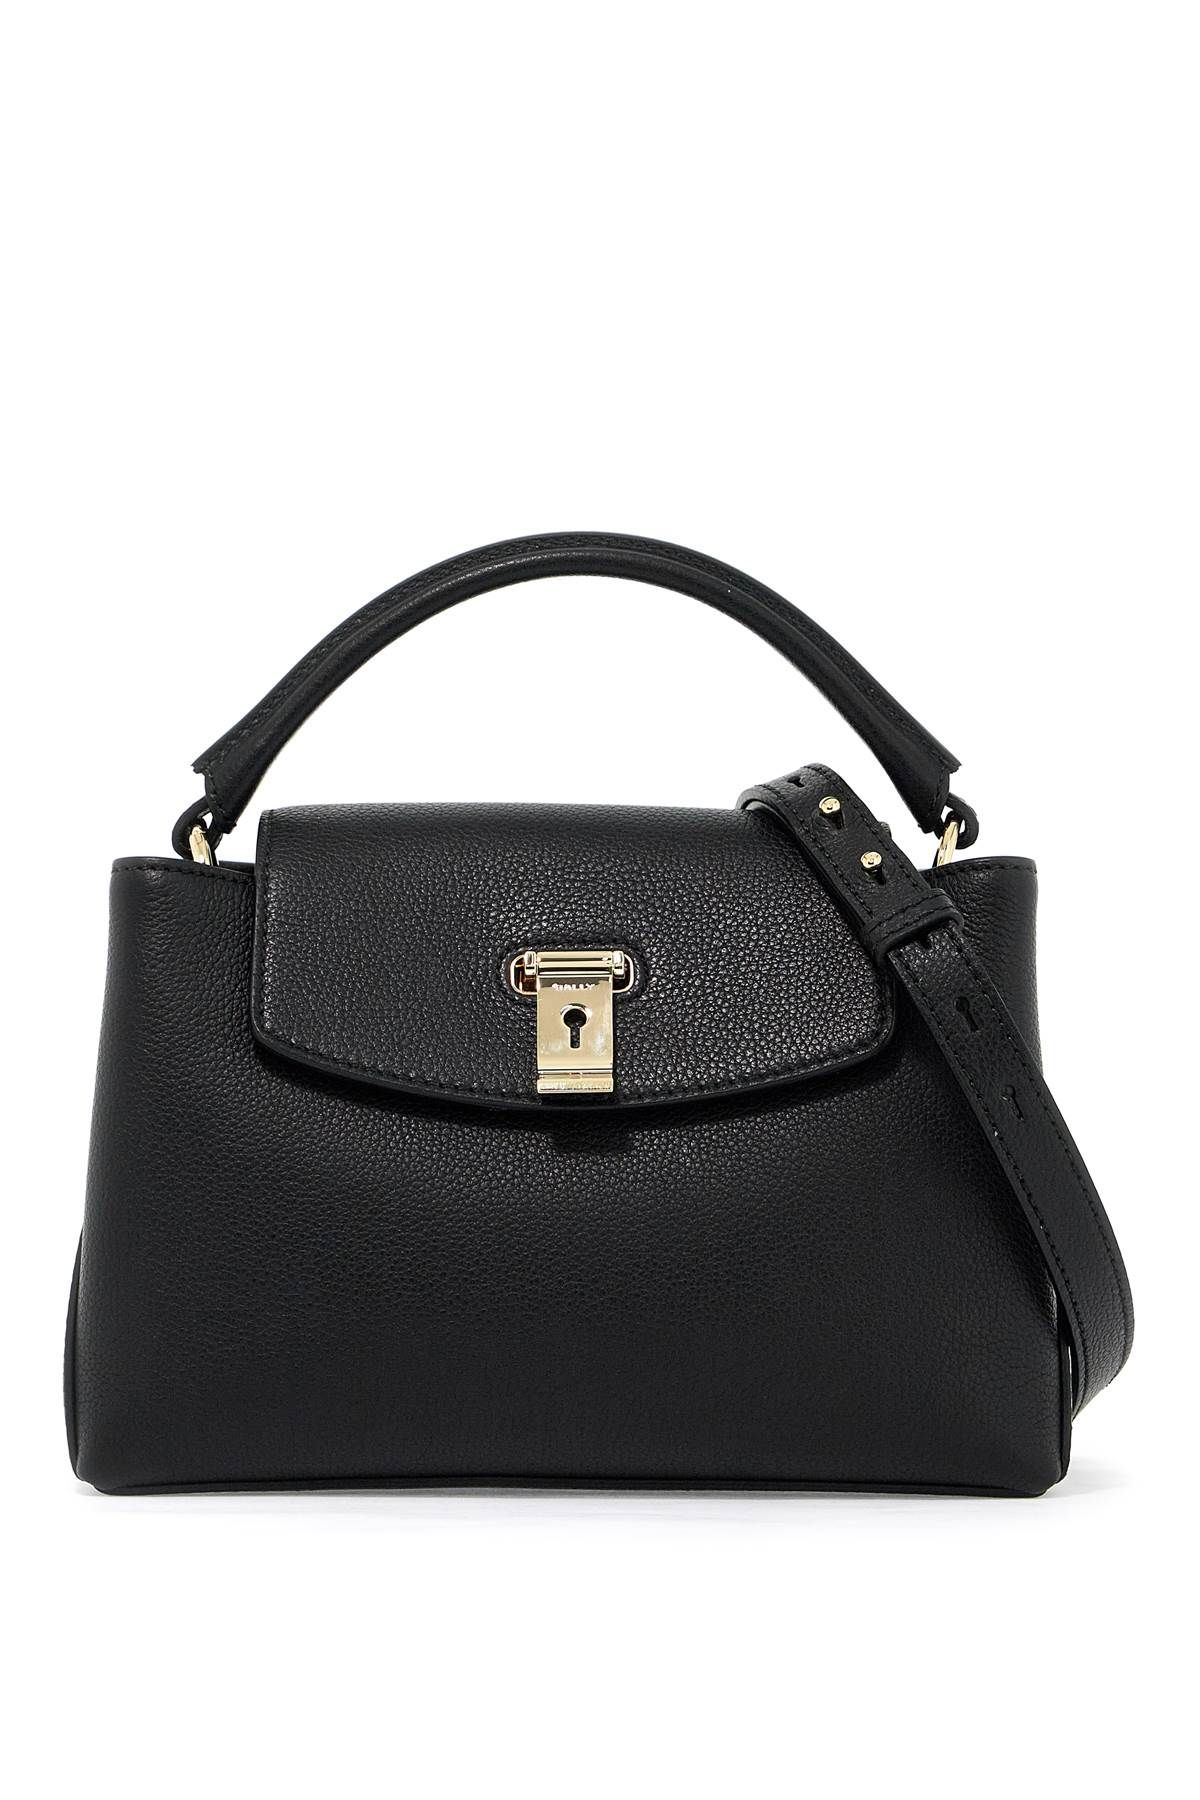 BALLY BALLY "handbag layka in hammered leather"